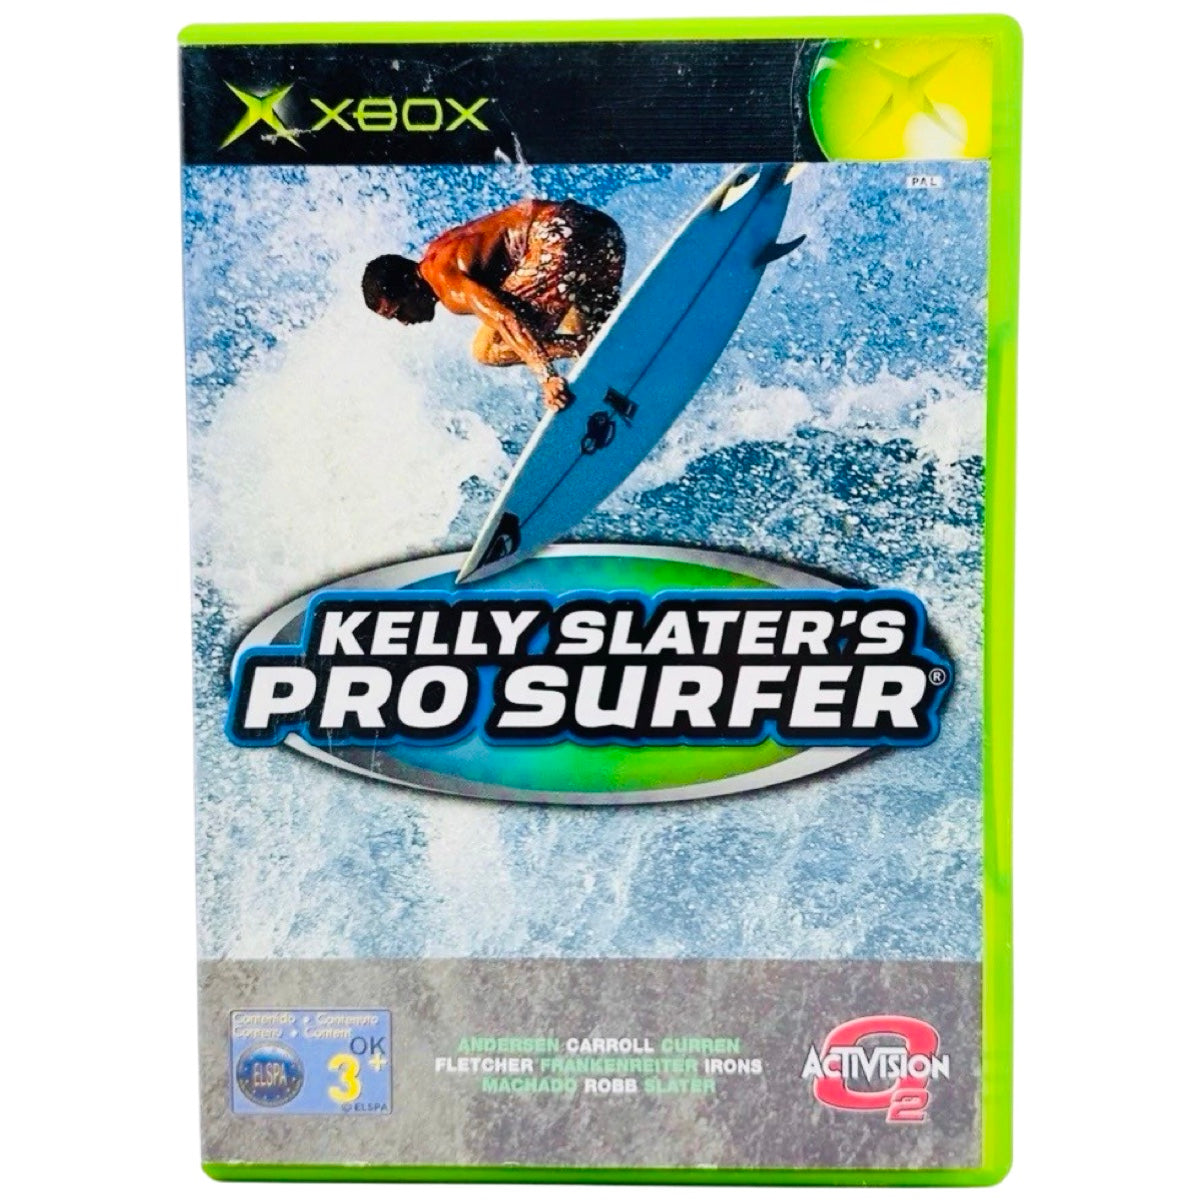 Xbox: Kelly Slater's Pro Surfer